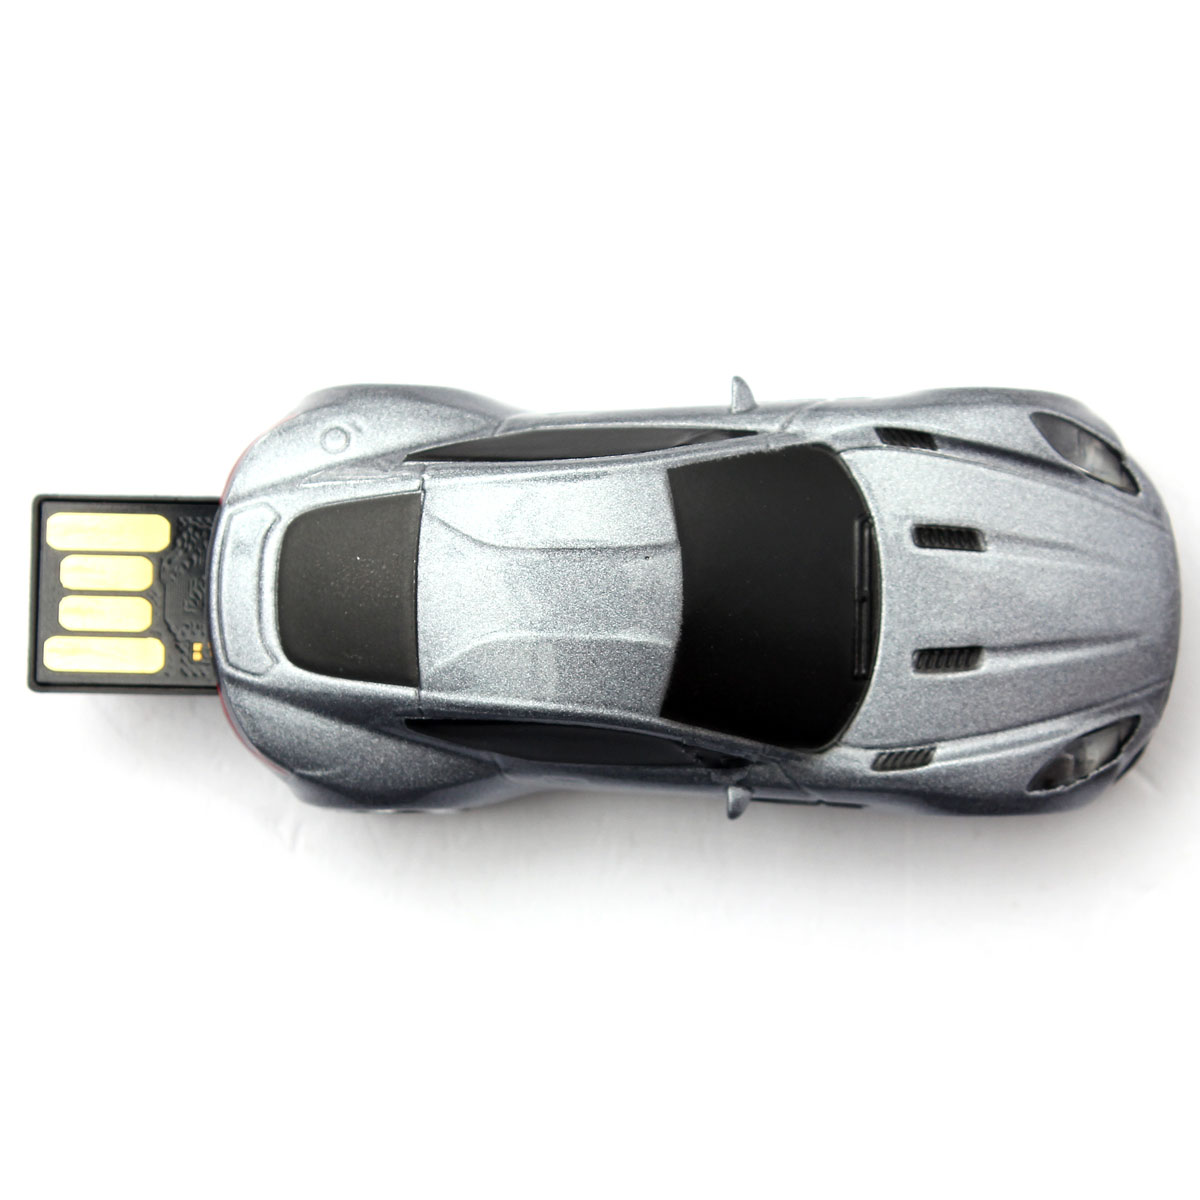 

Bestrunner 16G Luxury Авто Модель USB2.0 Flash Накопитель Thumb Memory U Disk